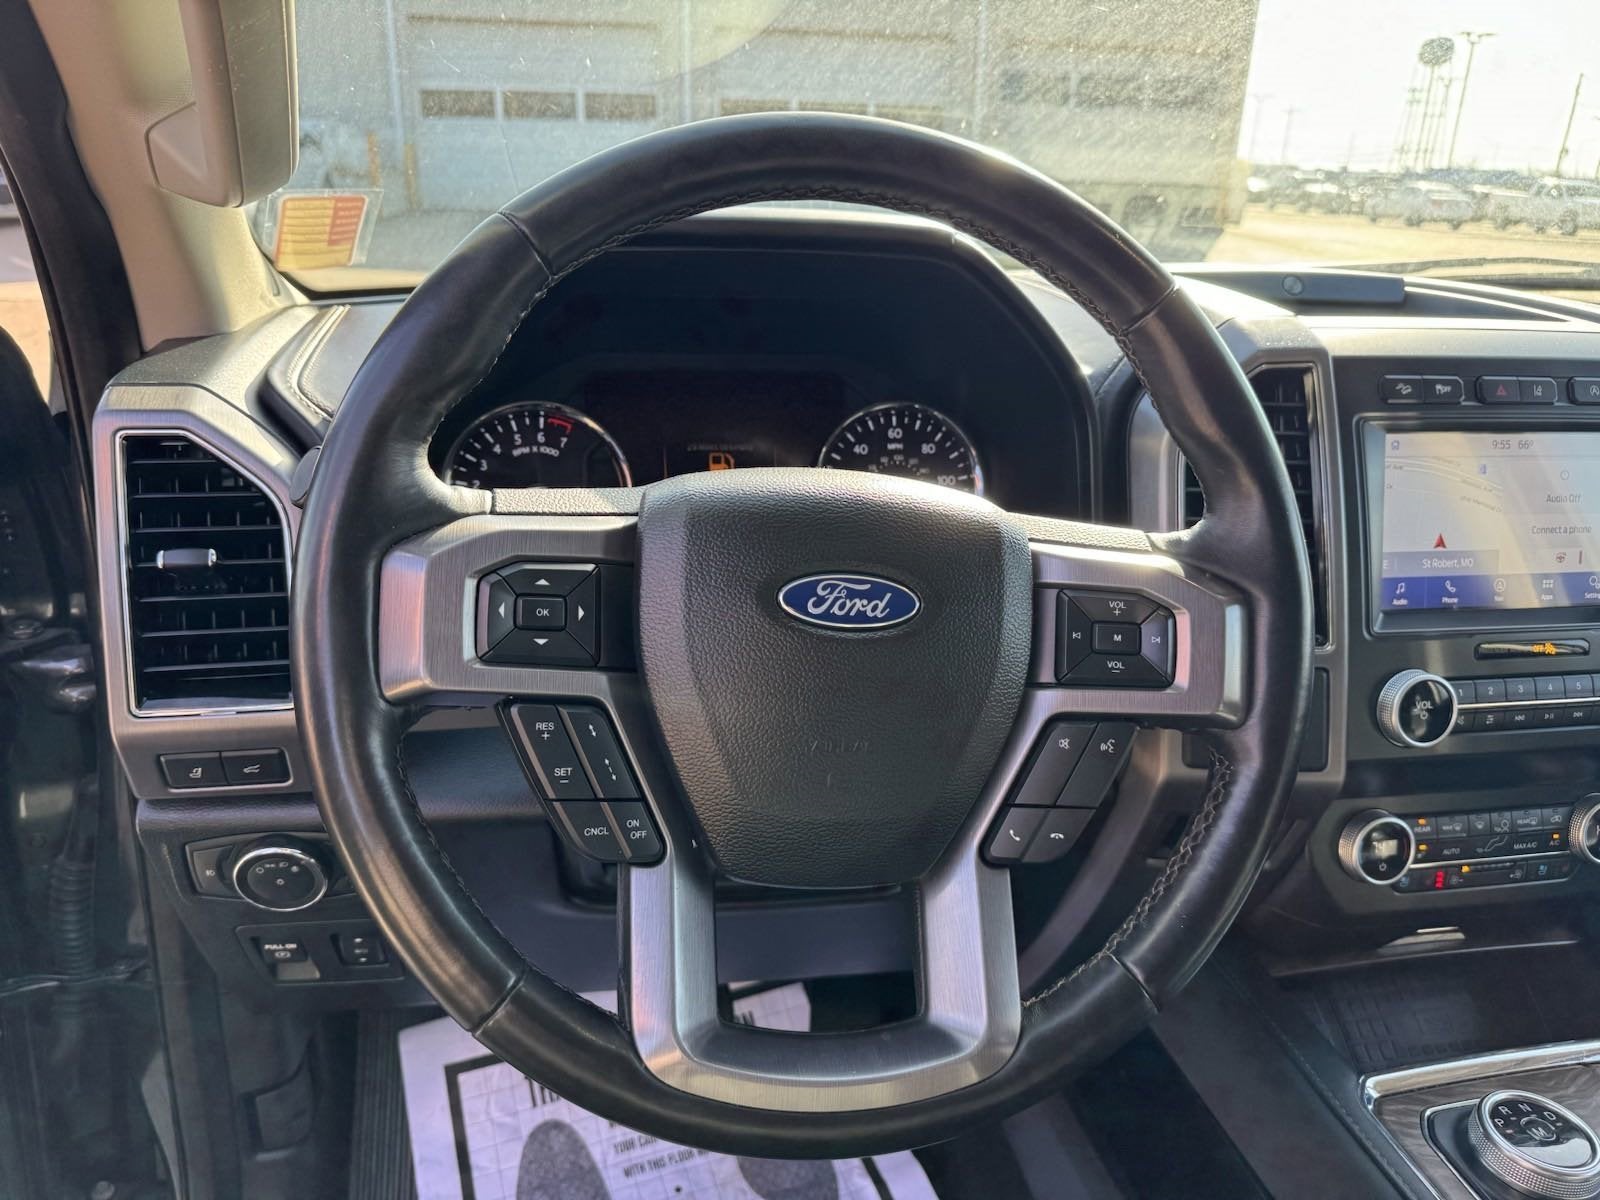 2021 Ford Expedition Platinum